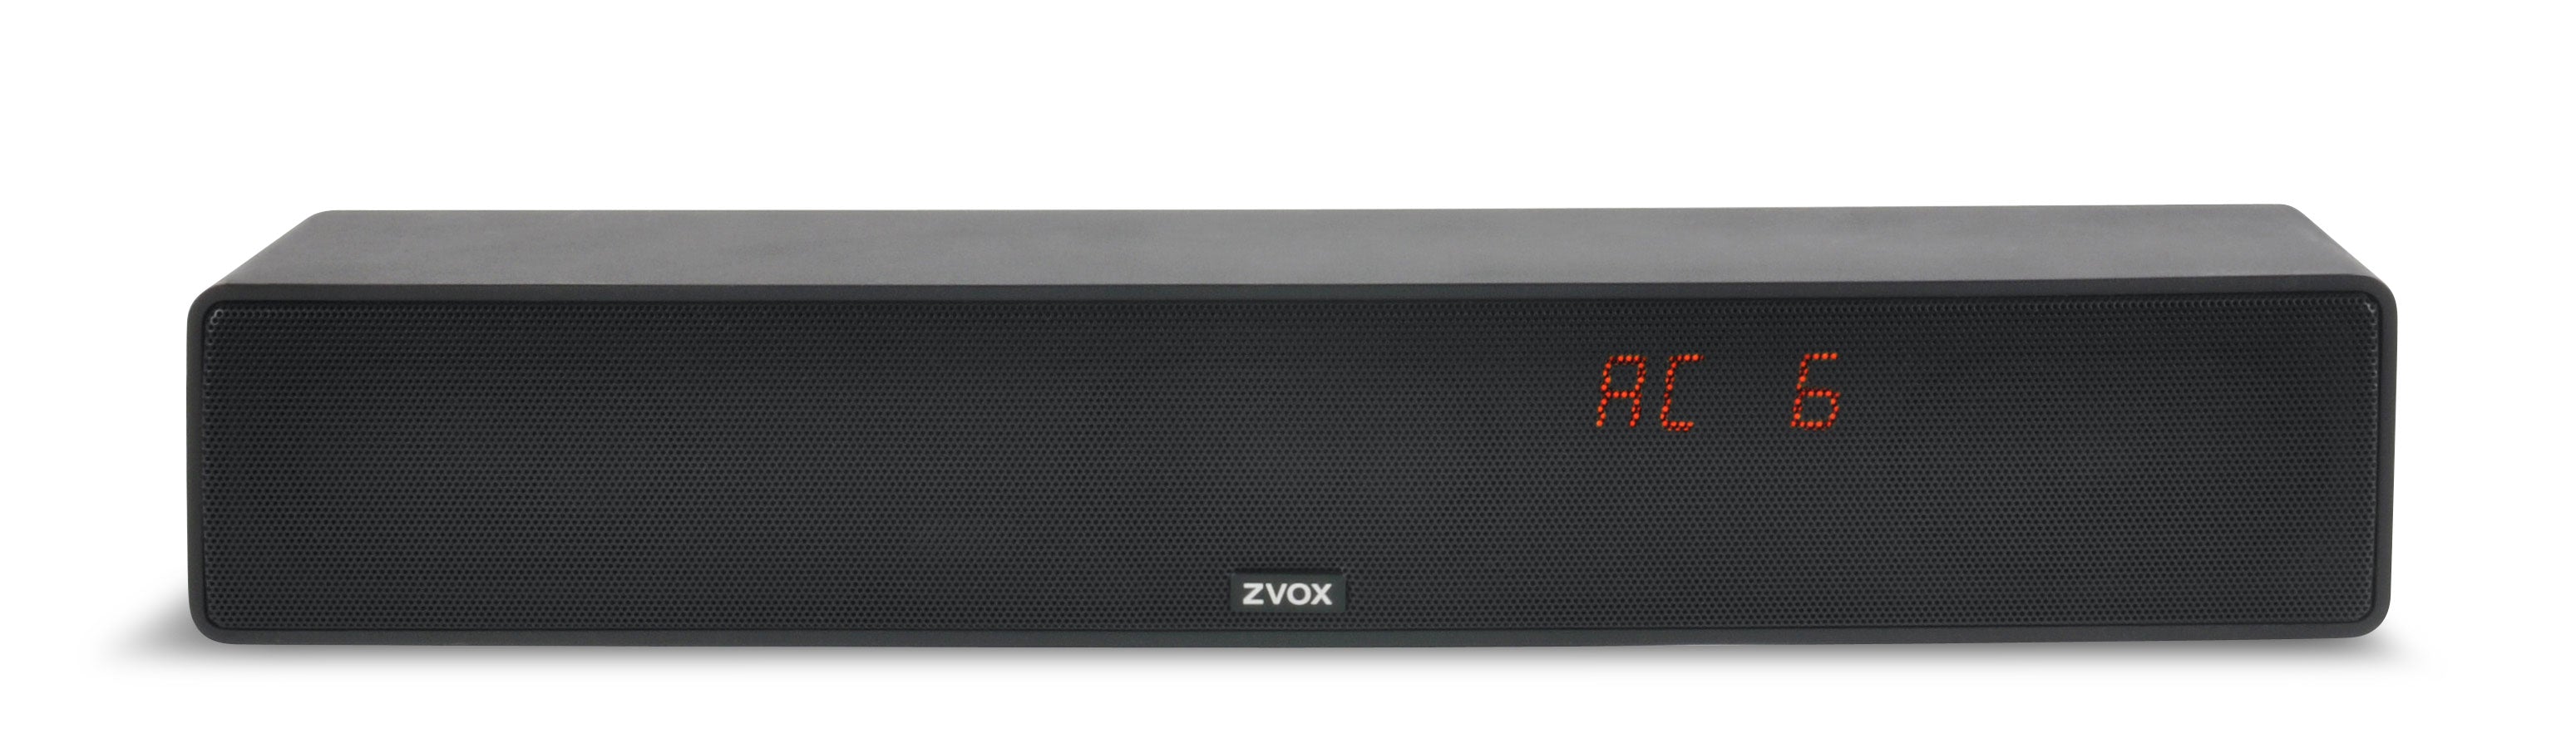 AccuVoice AV157 TV Speaker with Twelve Levels of Voice Boost - image 2 of 9